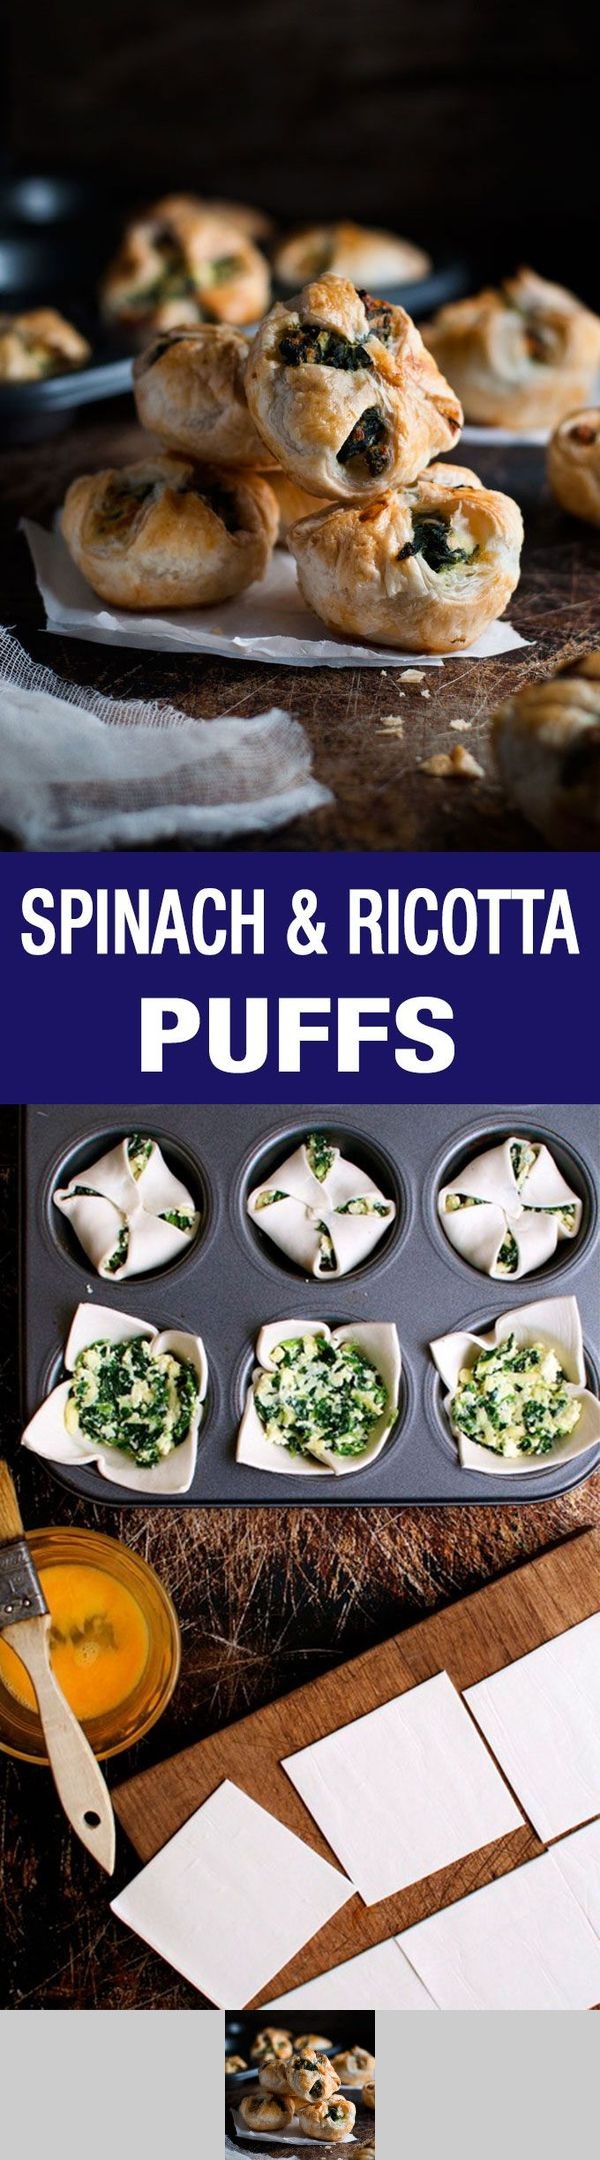 Spinach & Ricotta Puffs